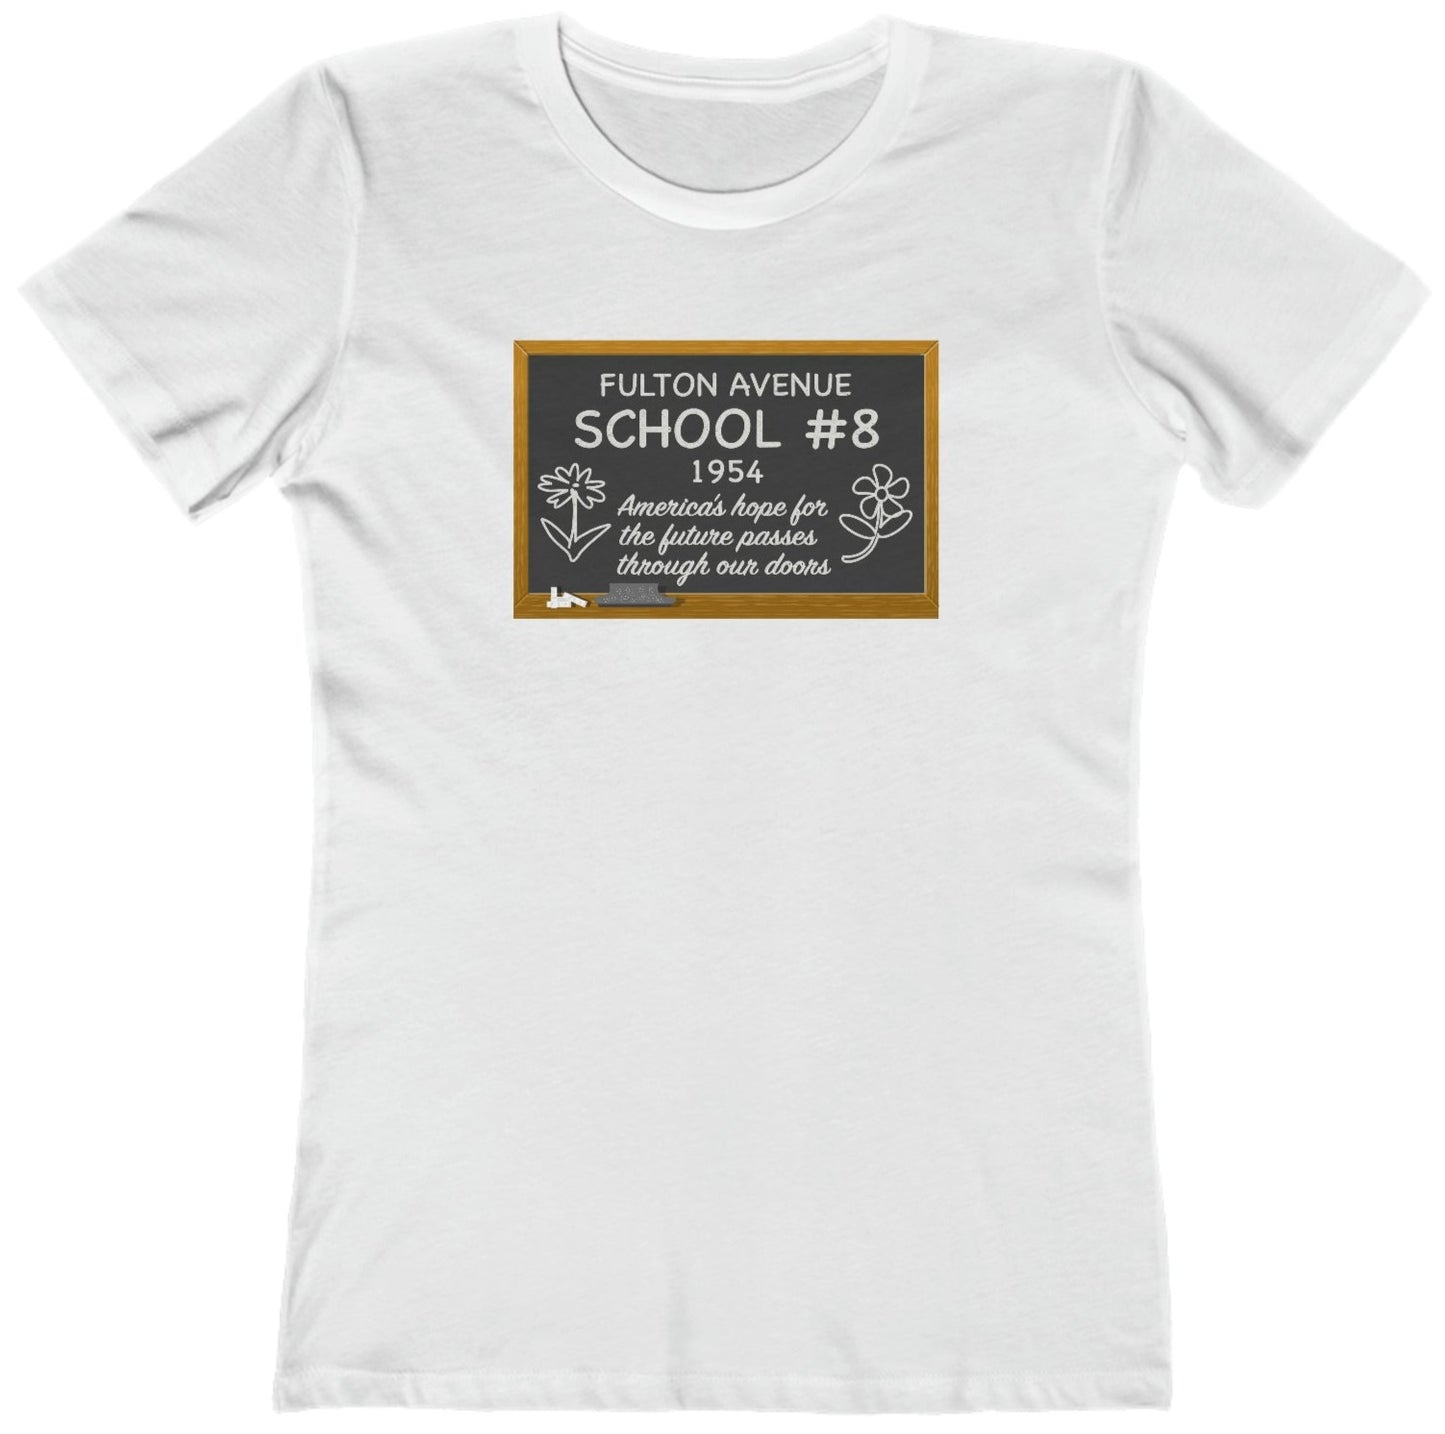 School 8 Oceanside t-shirt